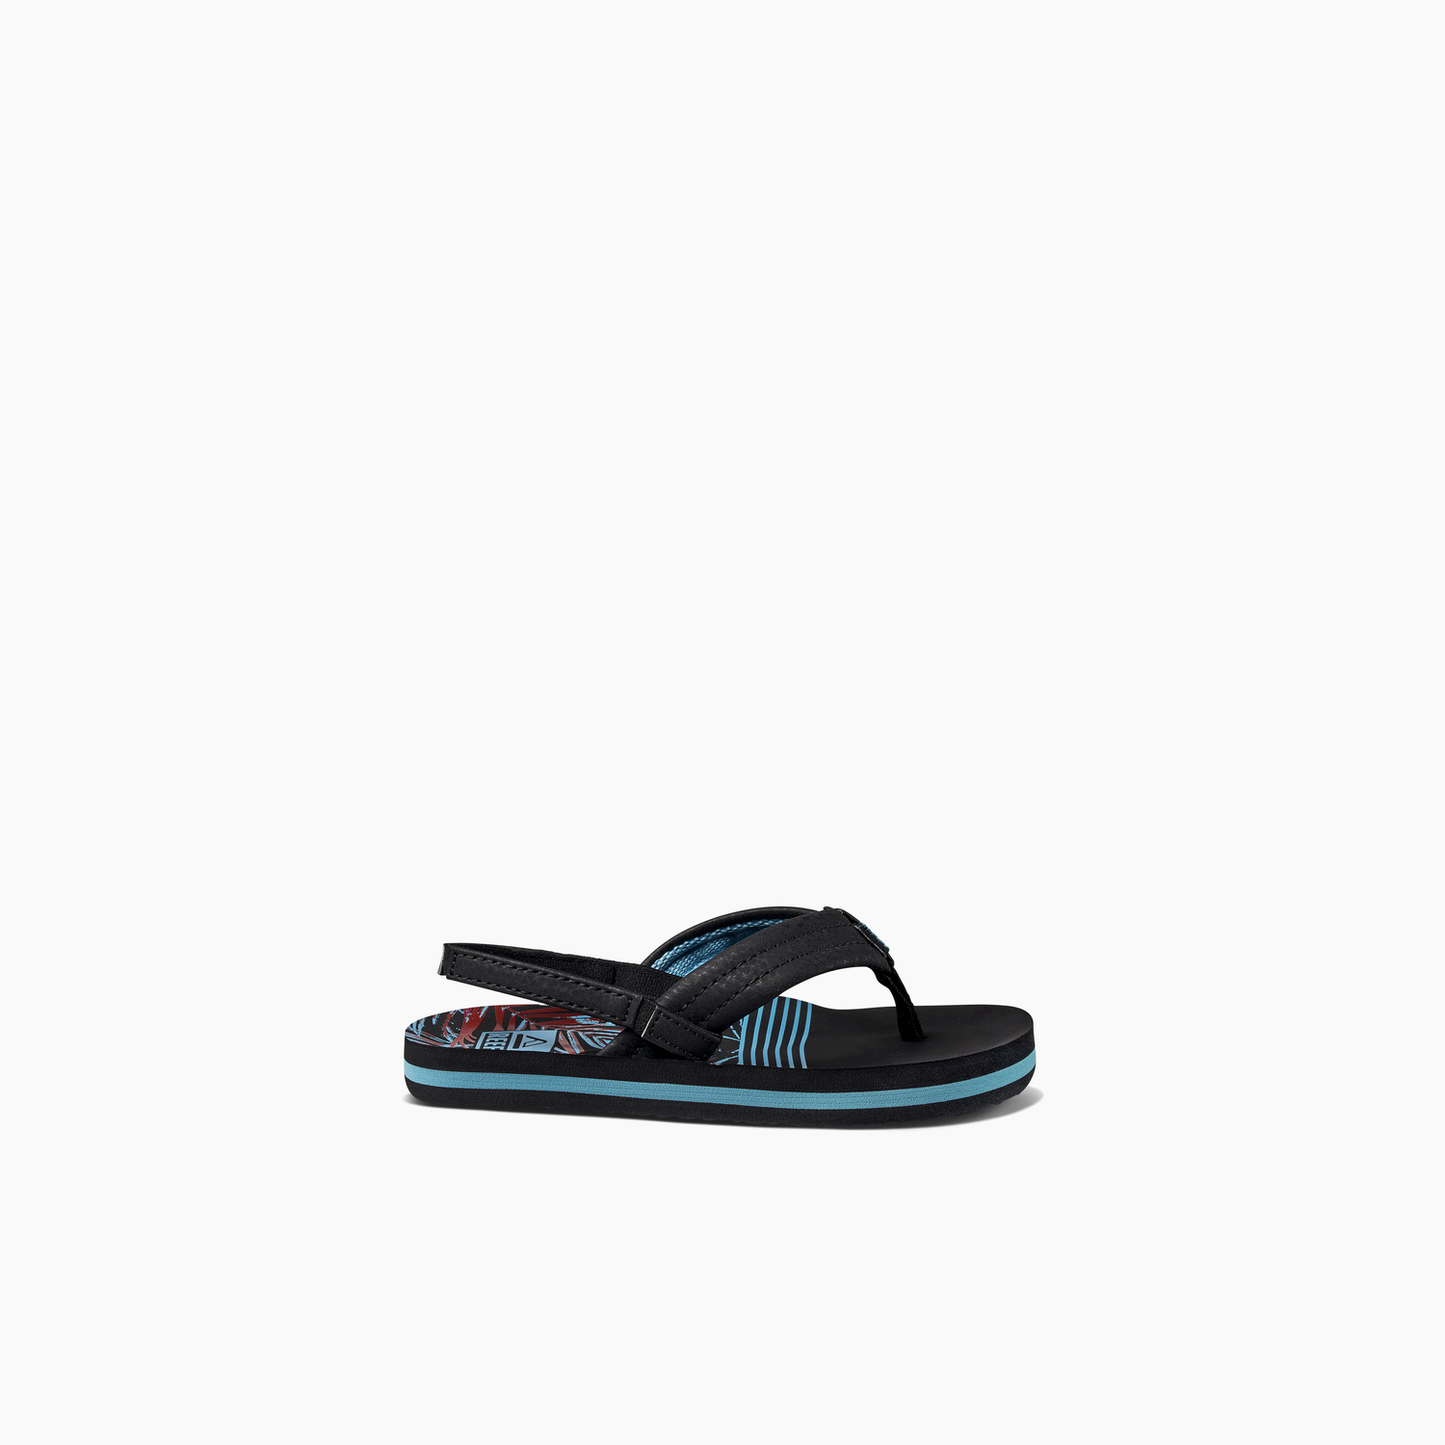 Reef Kids Ahi Youth Sandals - Tropical Dream youth footwear